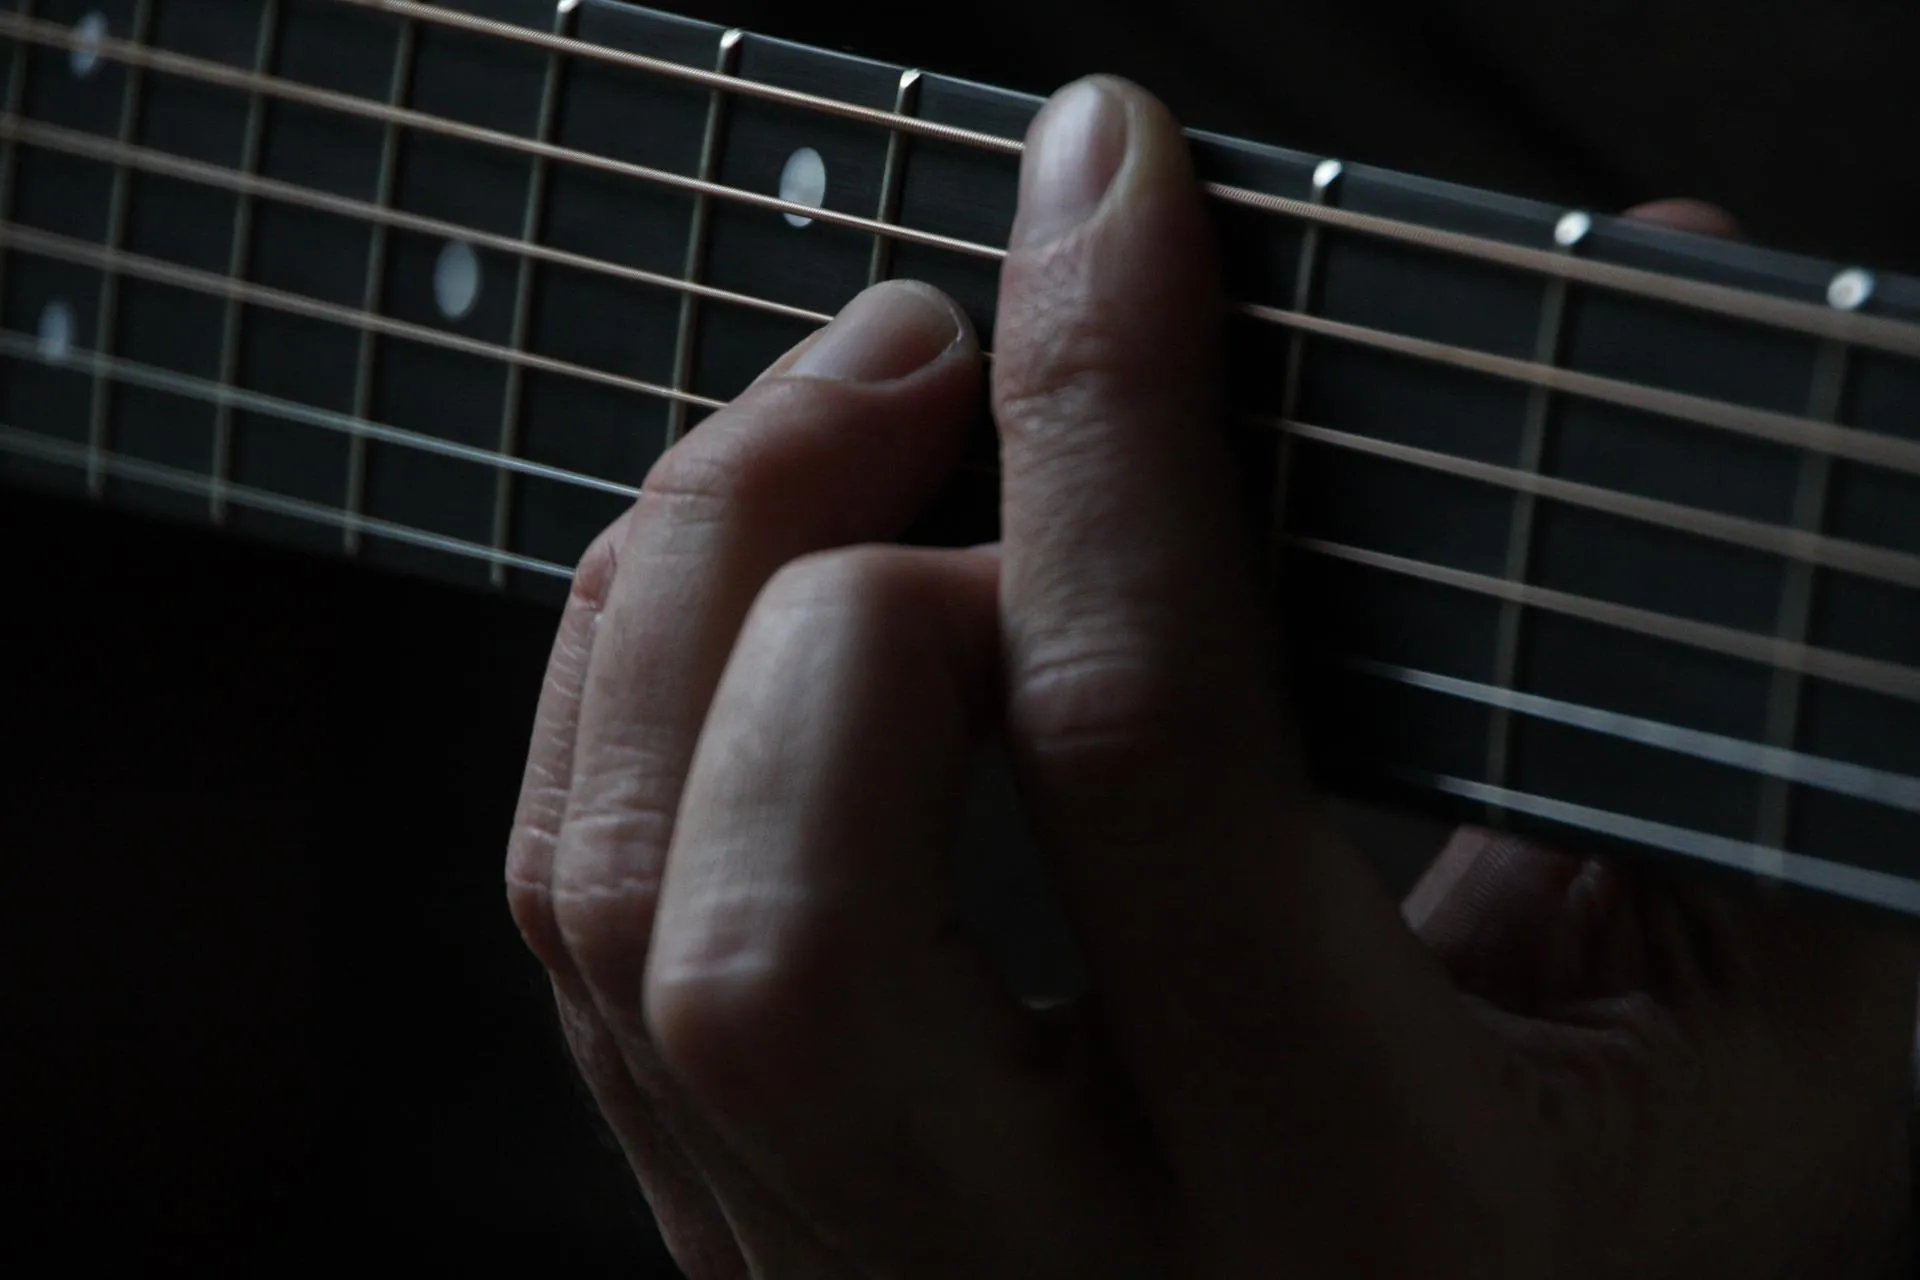 Guitar fingers